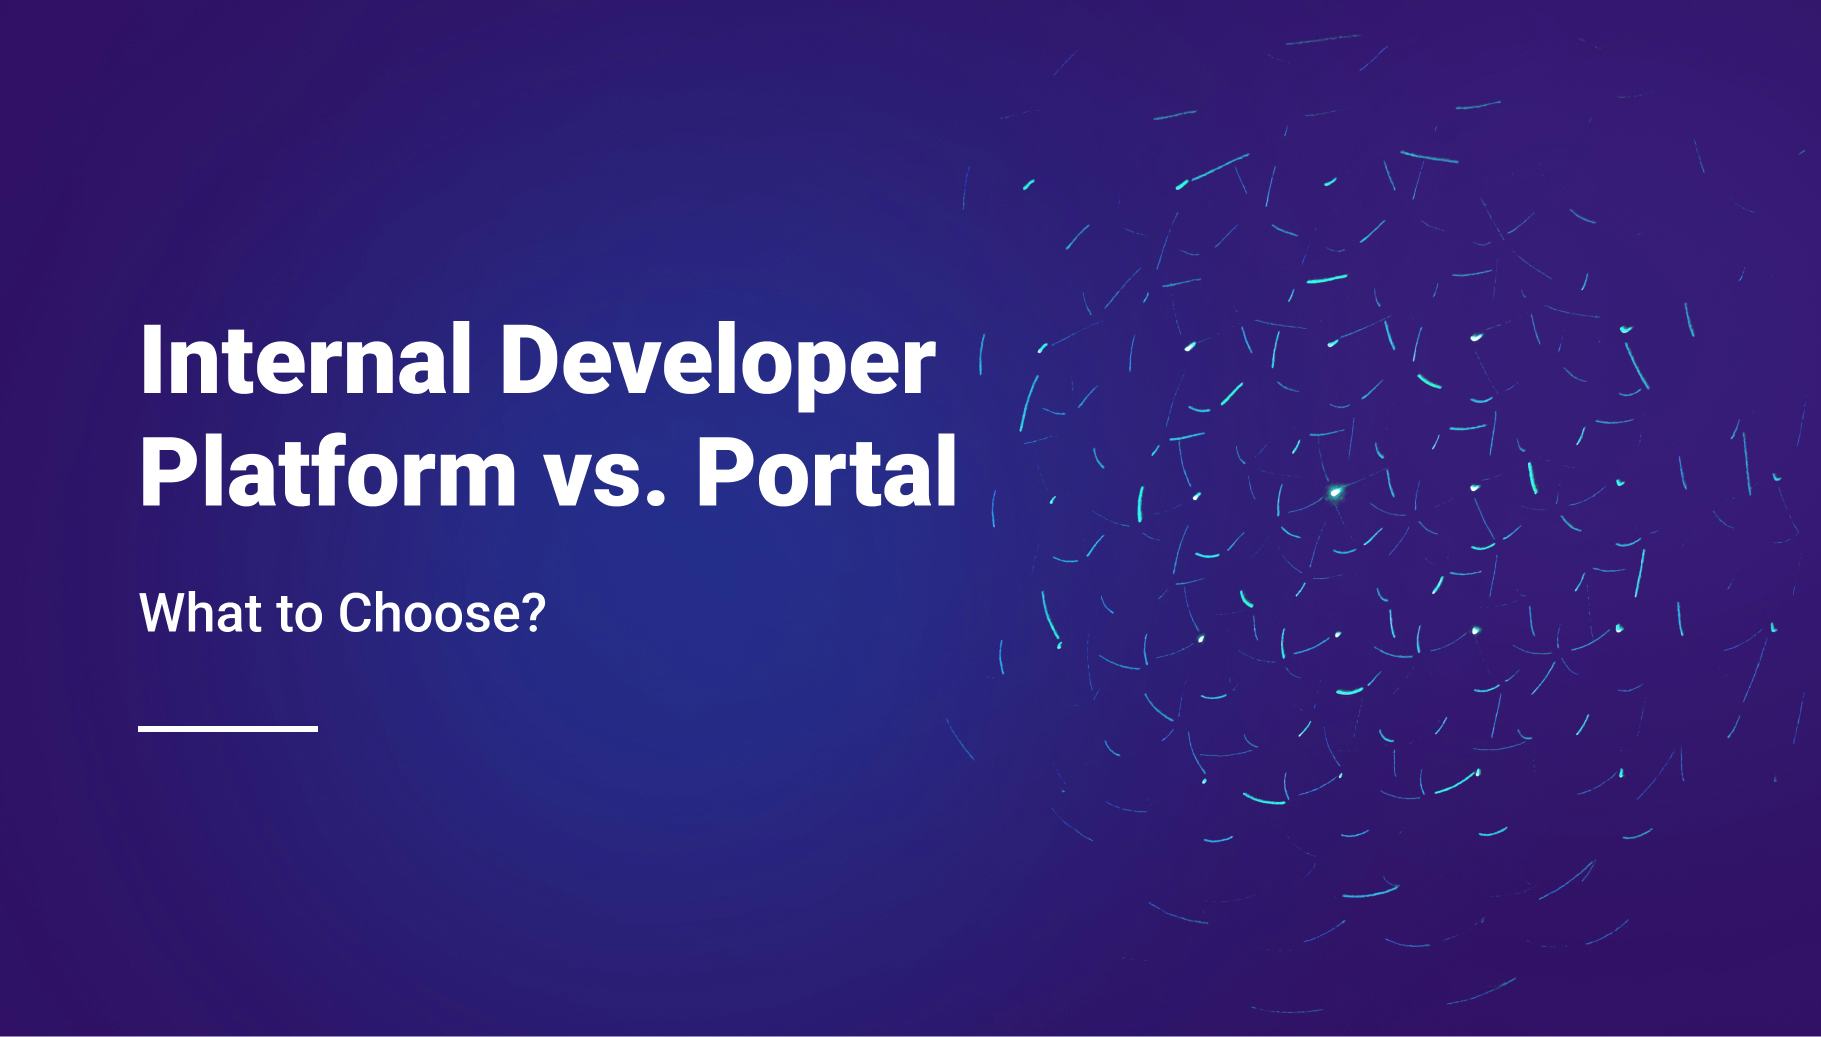 Internal Developer Platform vs. Internal Developer Portal: What to choose?